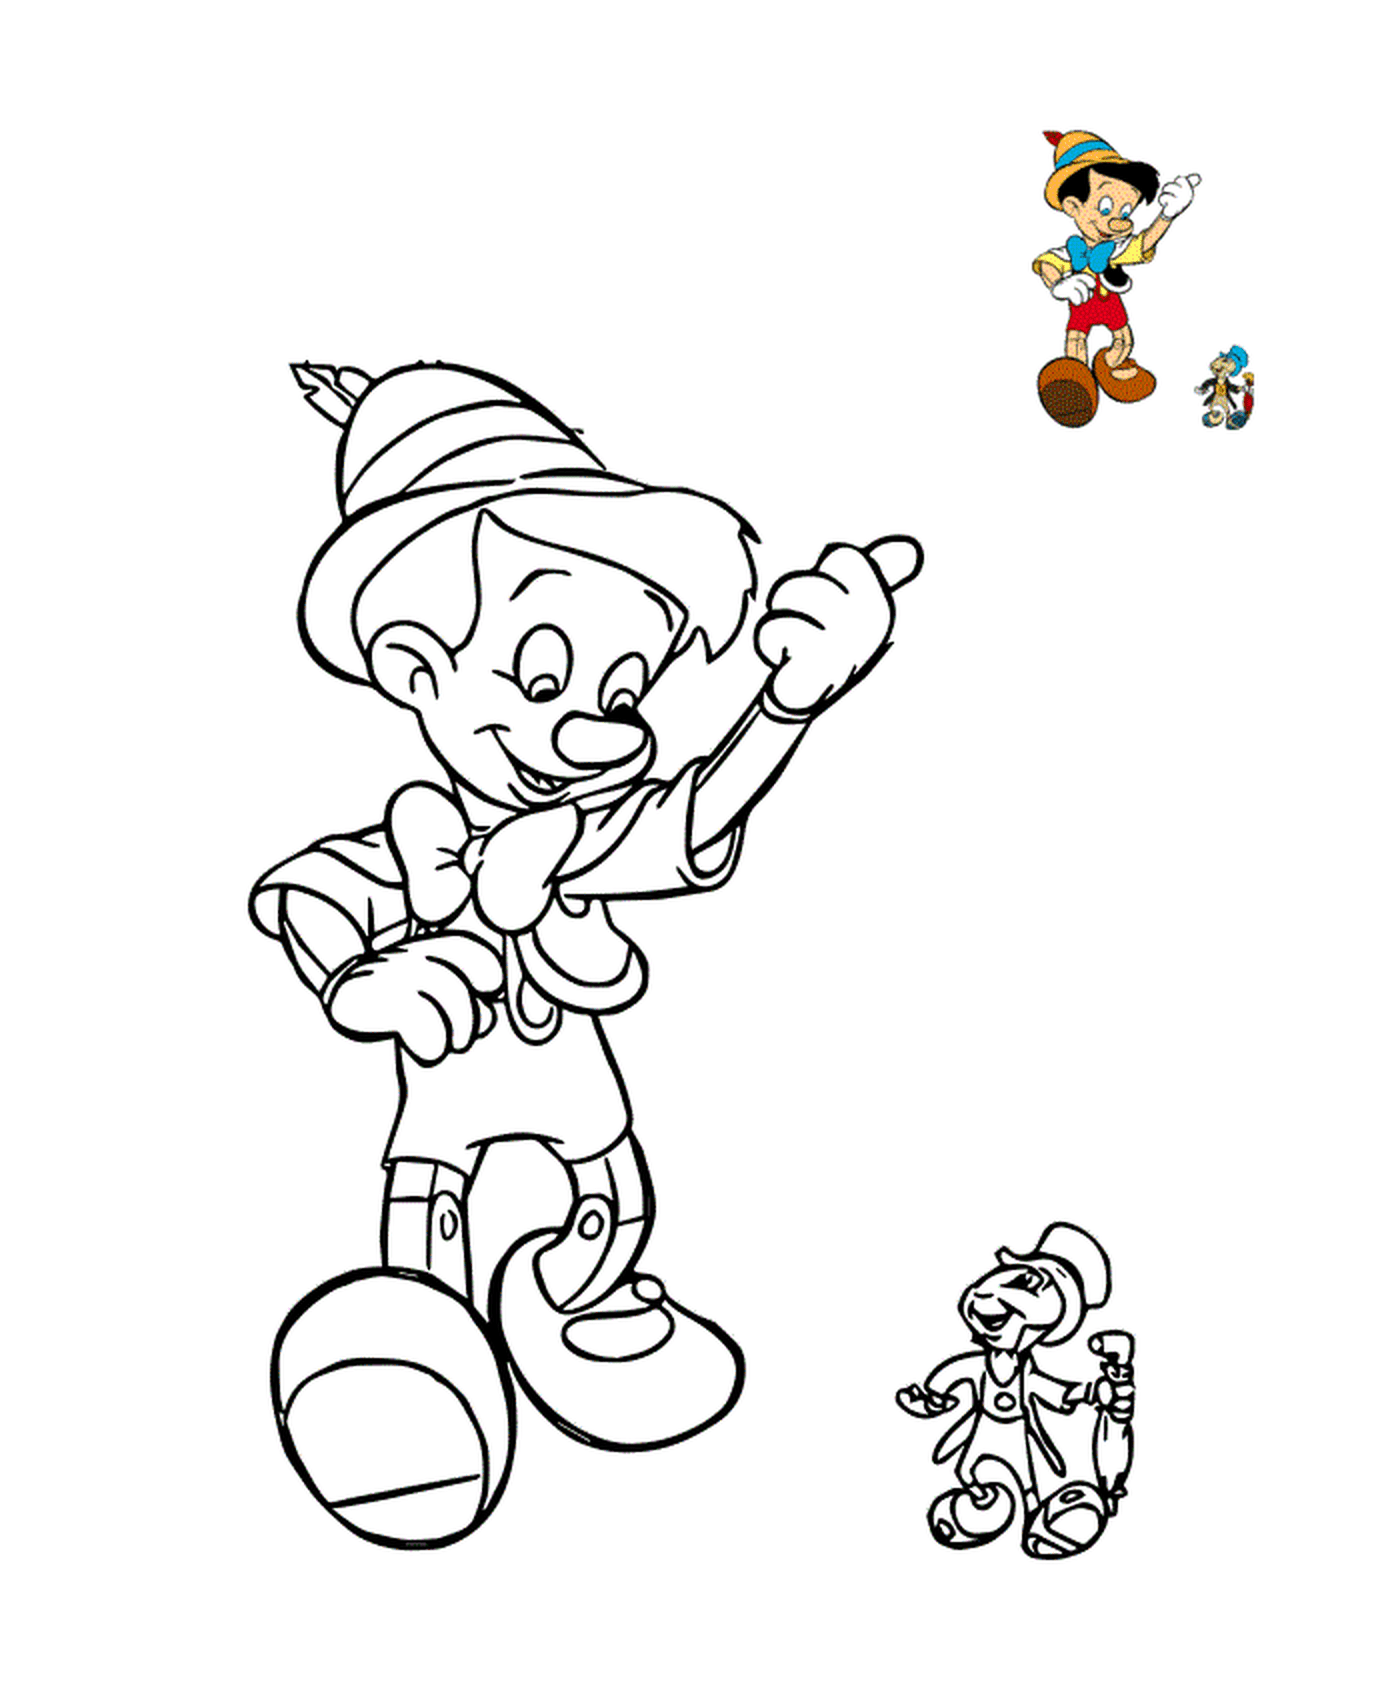  Pinocchio and Jiminy Cricket, companions 